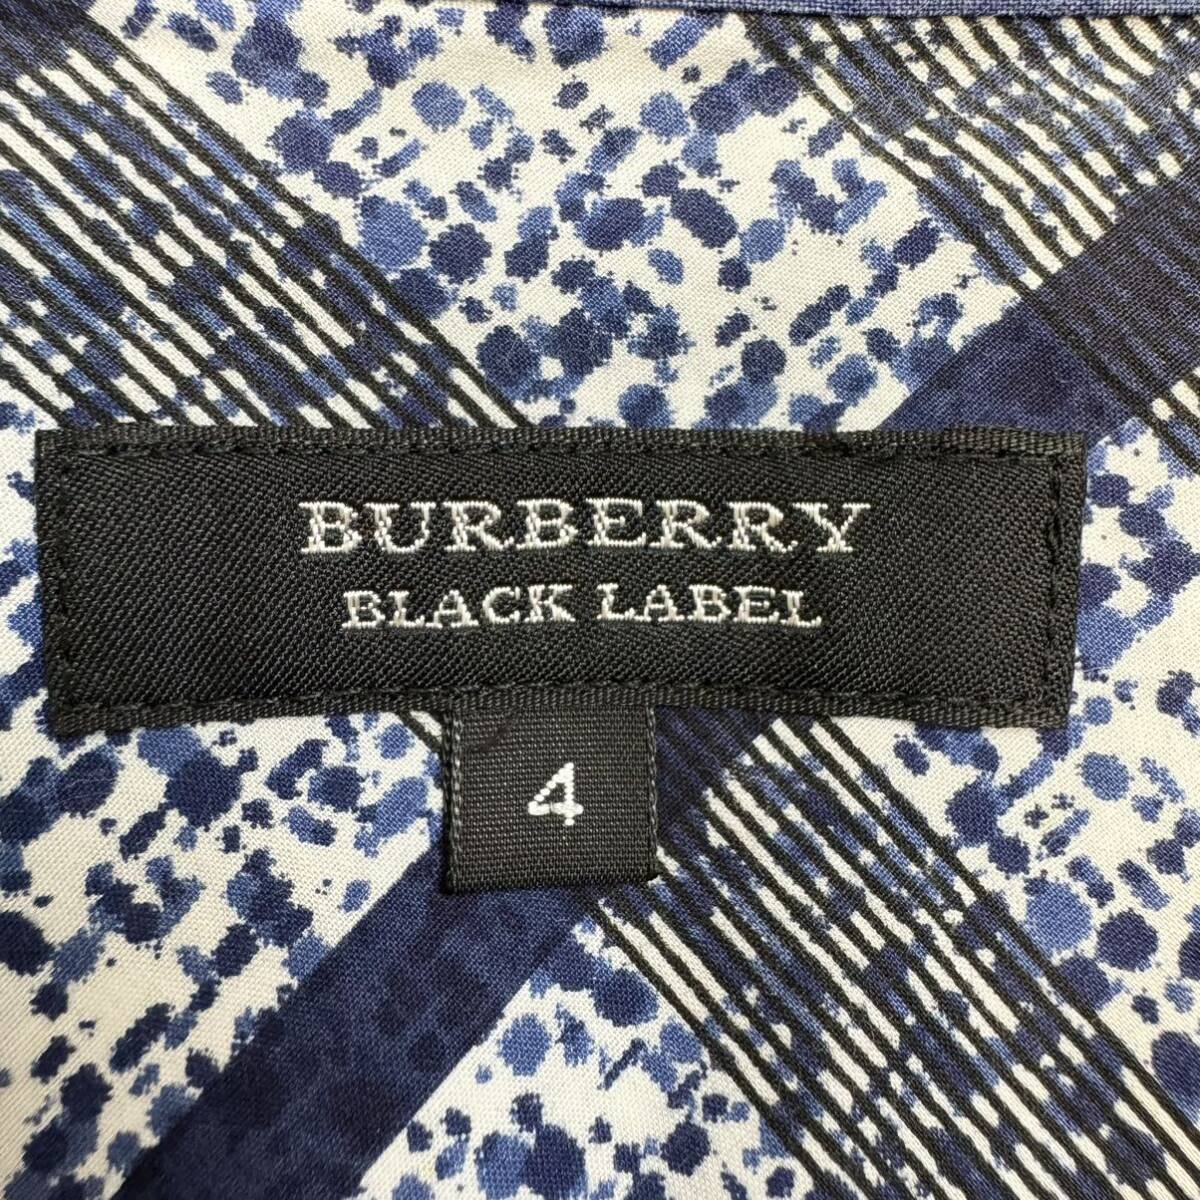  ultimate beautiful goods super rare XL Burberry Black Label noba check total pattern mega check long sleeve dress shirt BURBERRY BLACK LABEL size 4 spring summer 